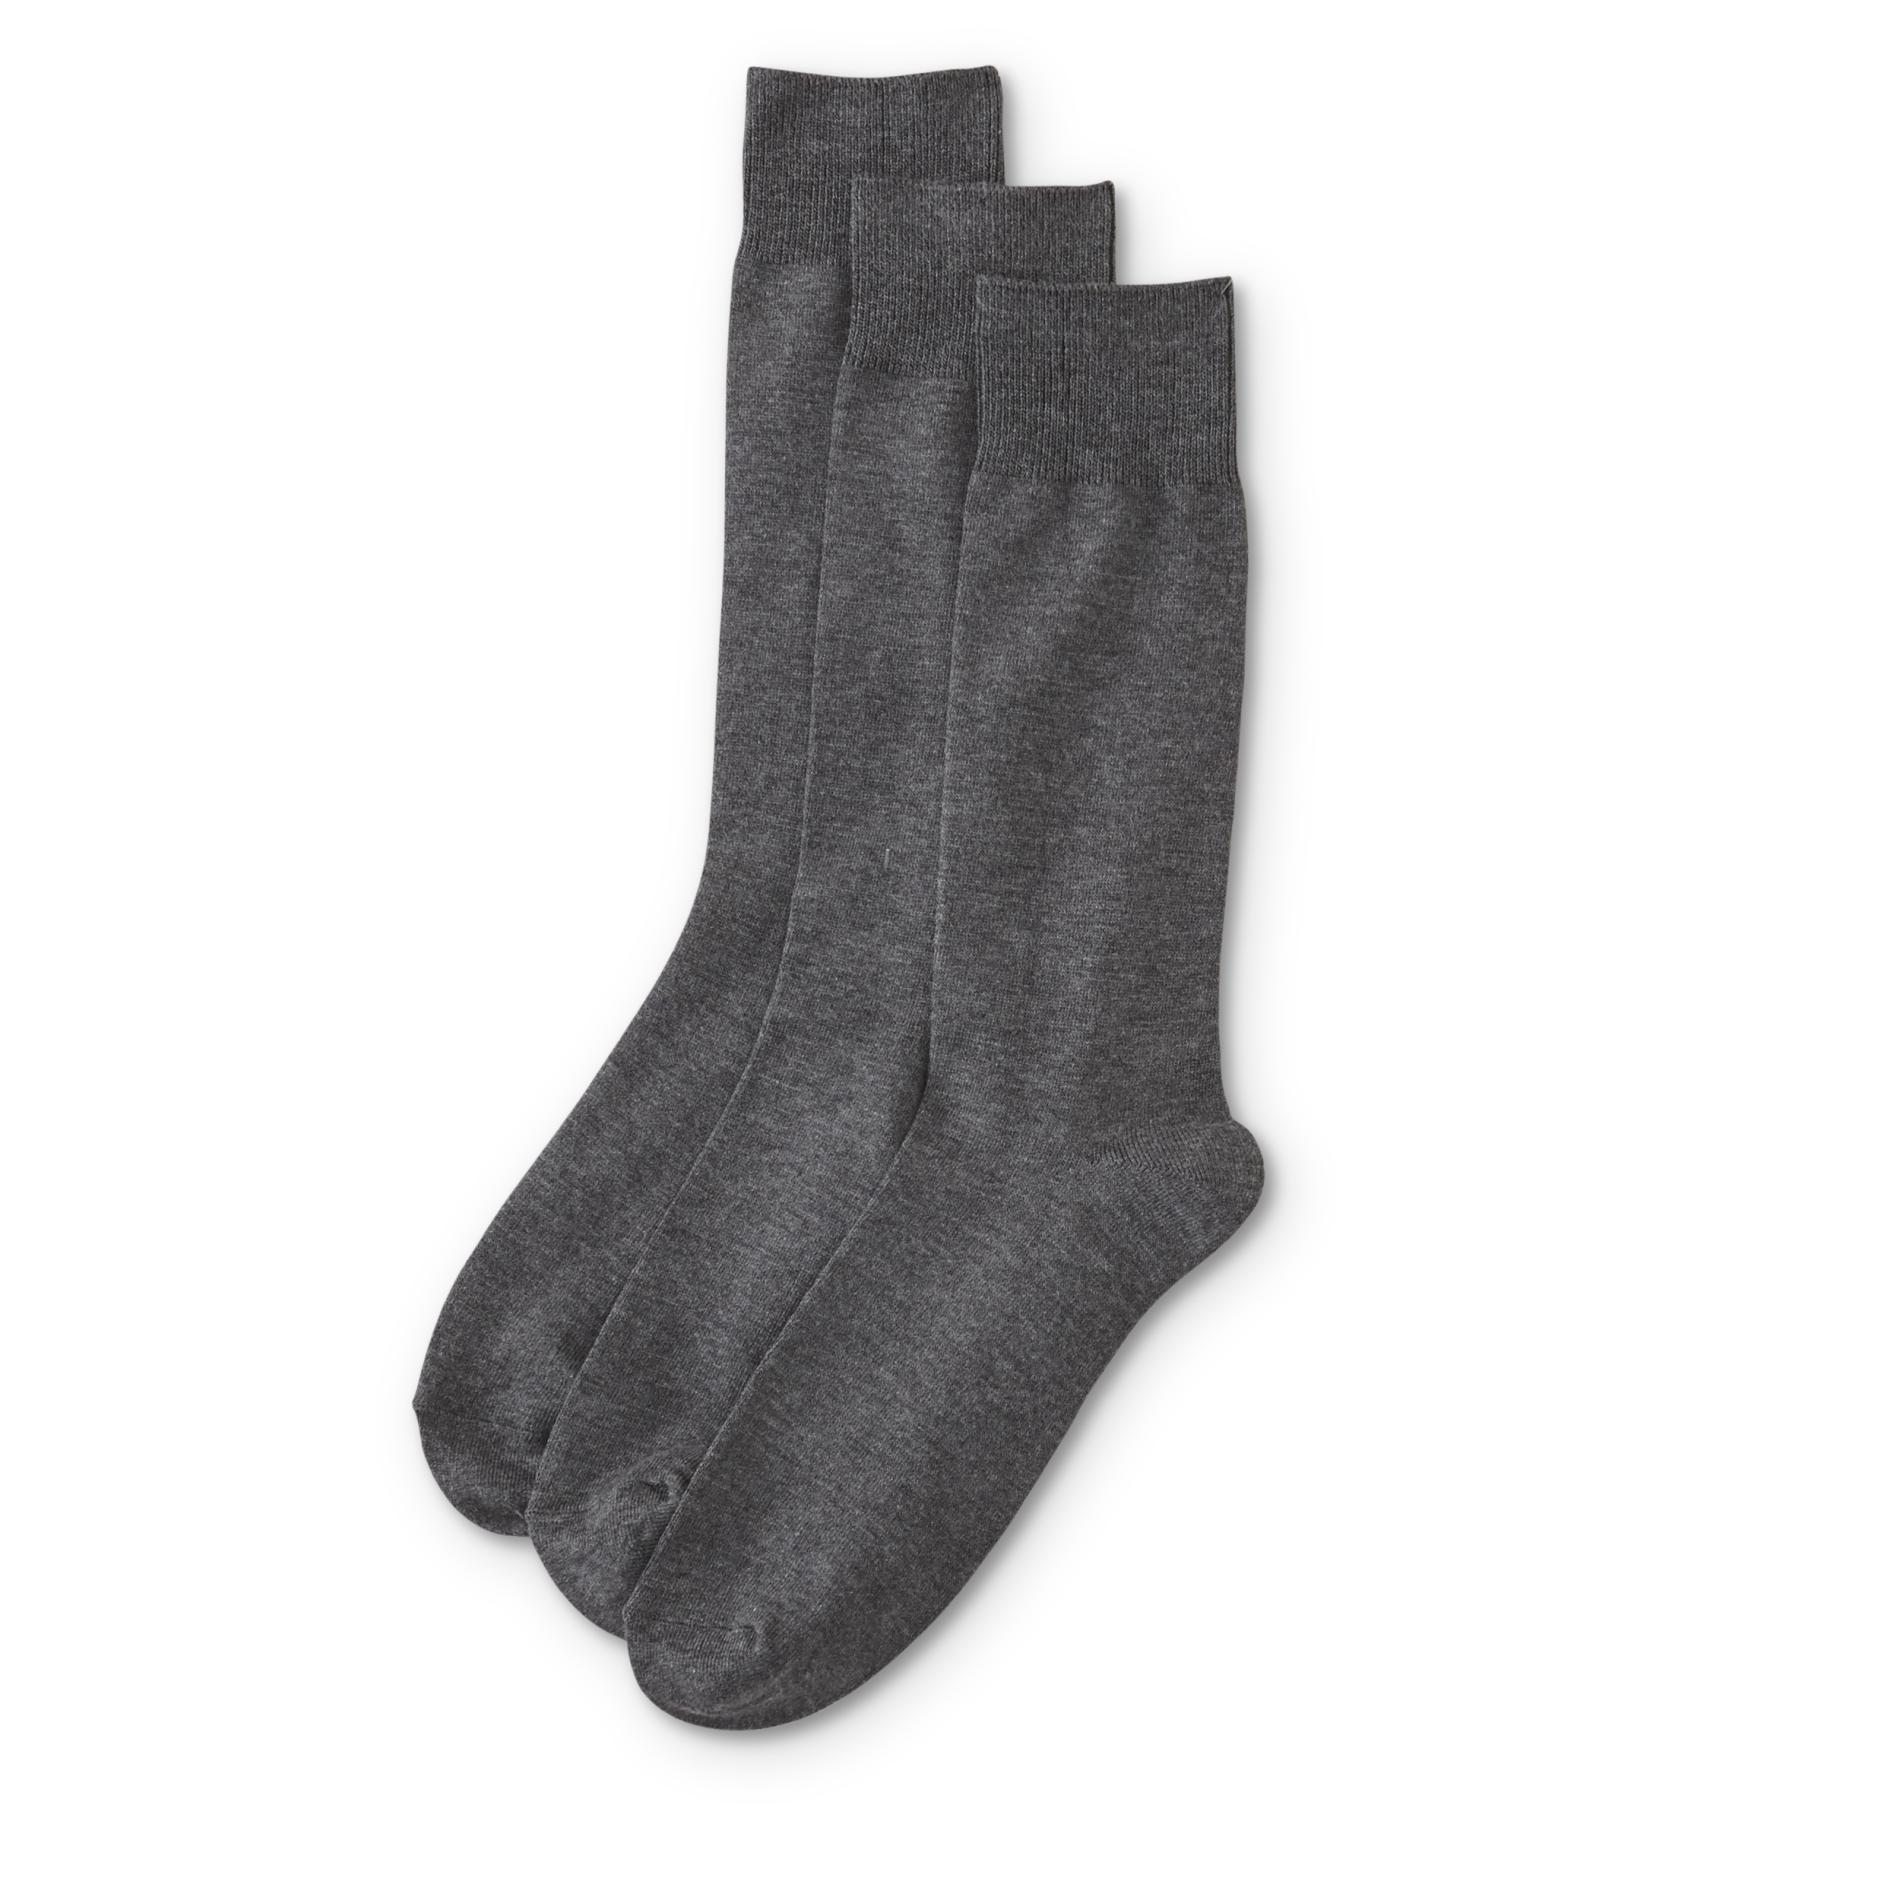 Basic Editions Men's 3-Pairs Crew Socks